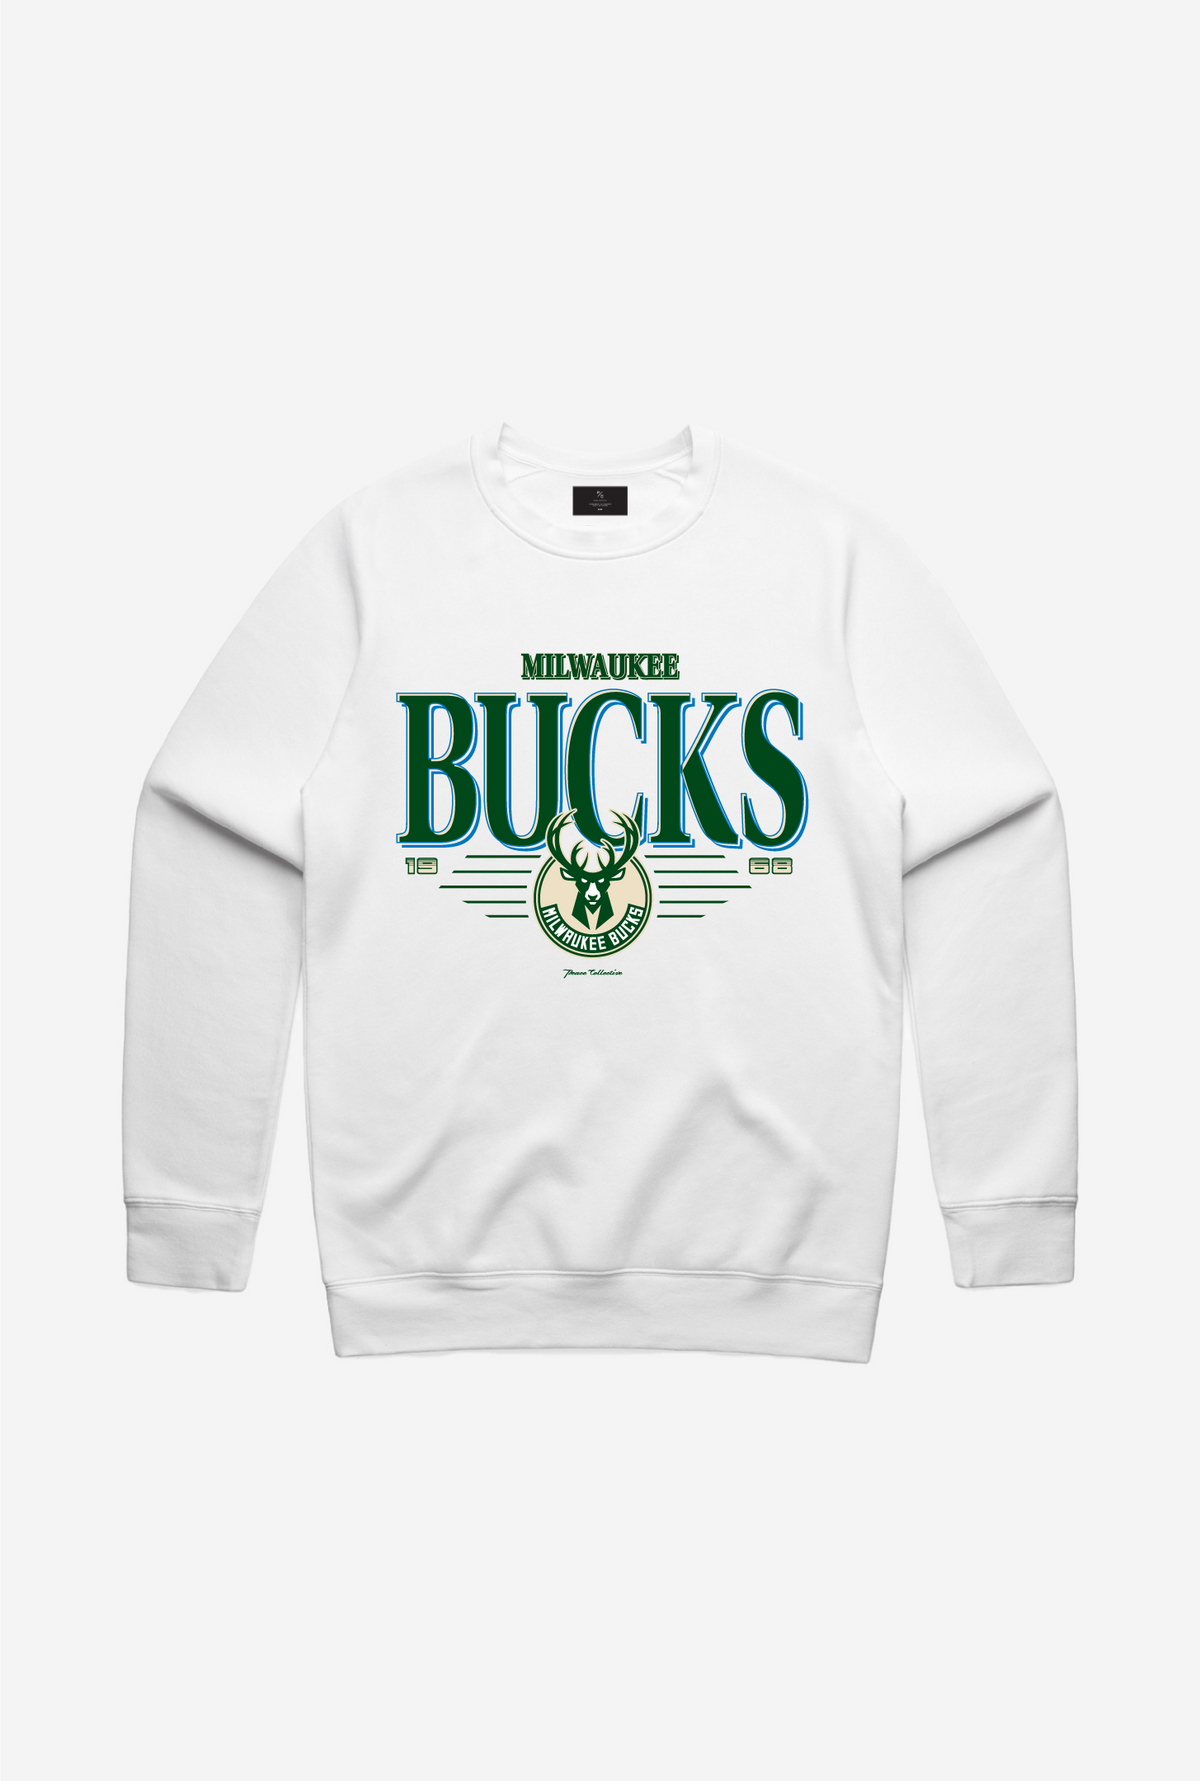 Milwaukee Bucks  Signature Crewneck - White